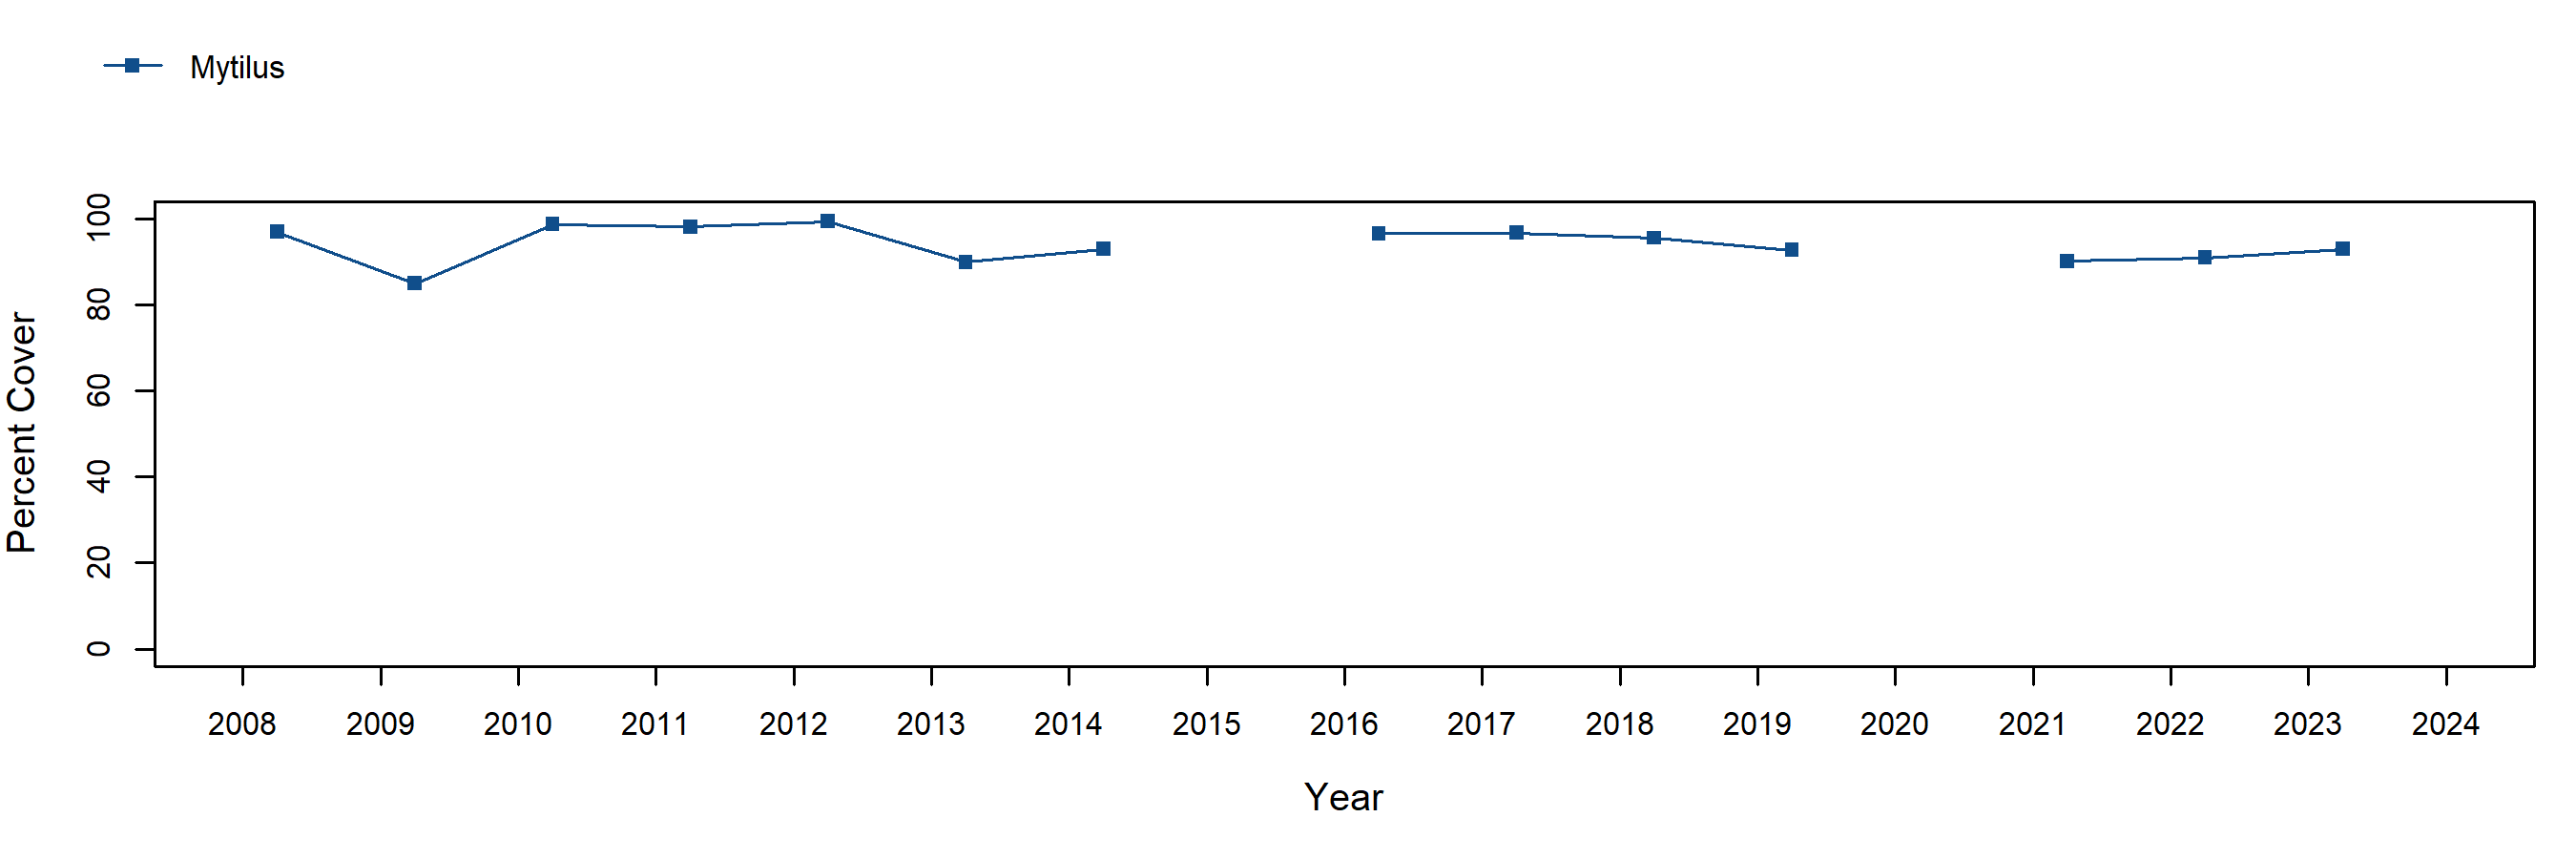 Kydikabbit Point Mytilus trend plot